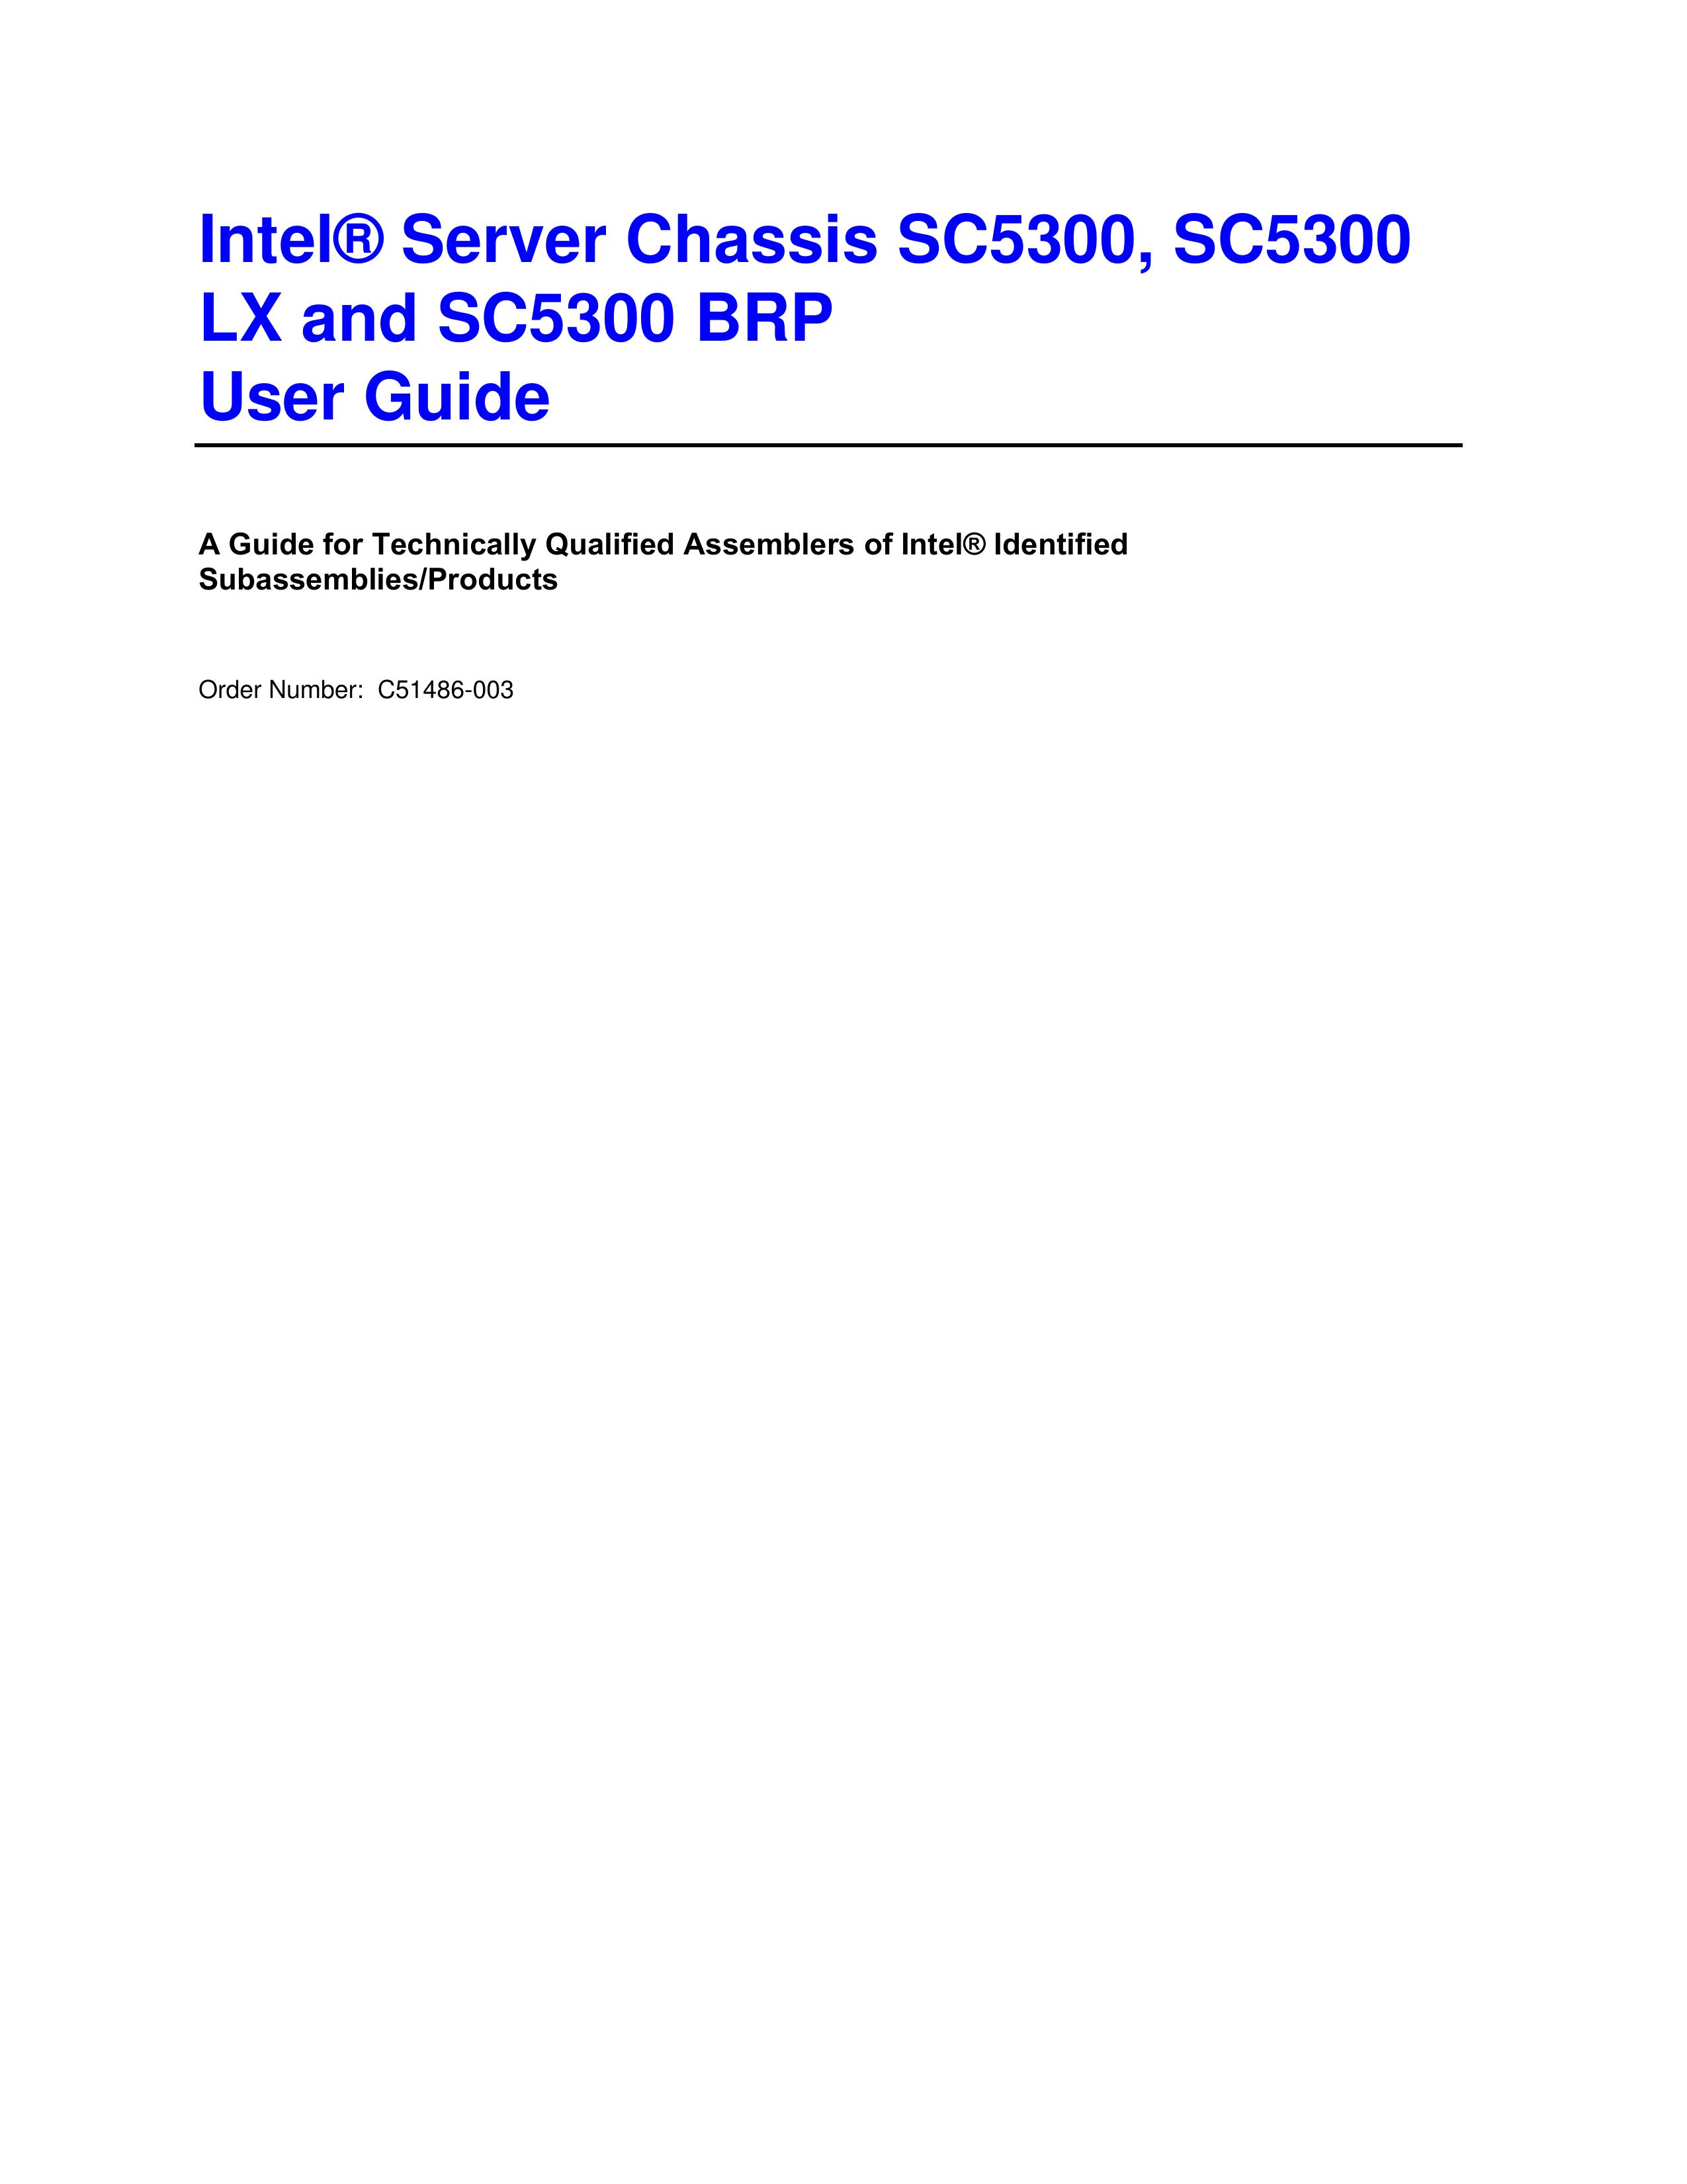 Intel SC5300 LX Life Jacket User Manual